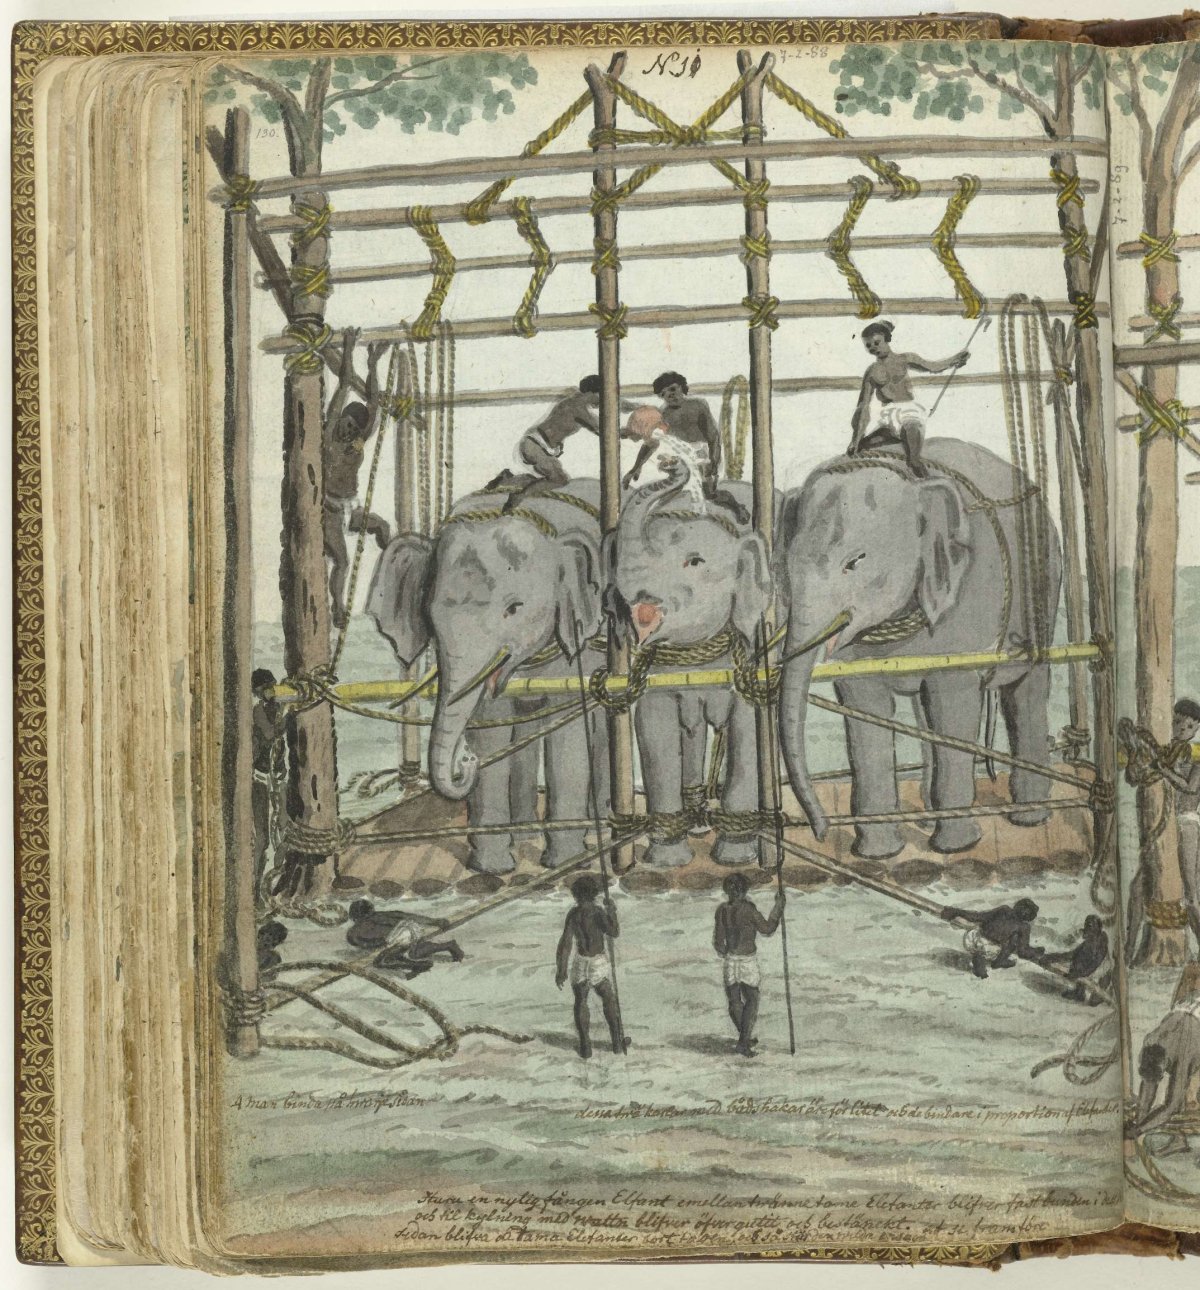 Taming an elephant, Jan Brandes, 1785